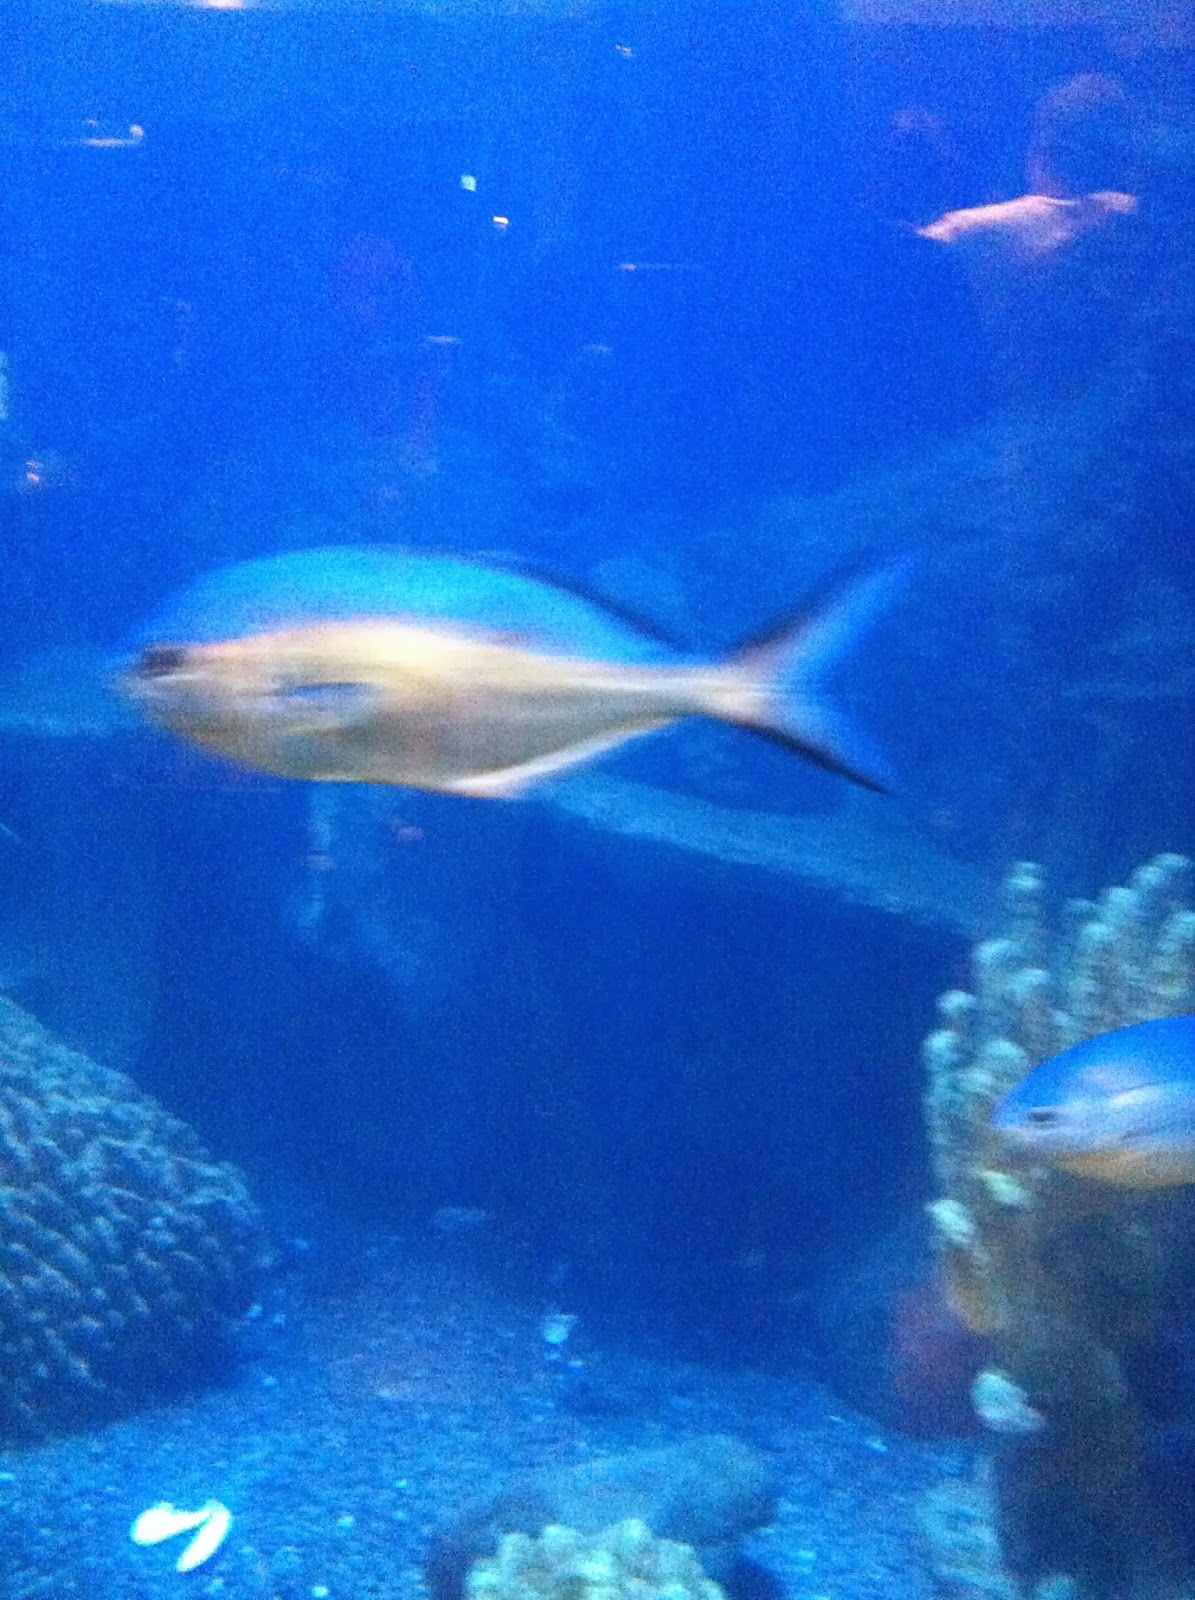 A fishy in the aquarium. 